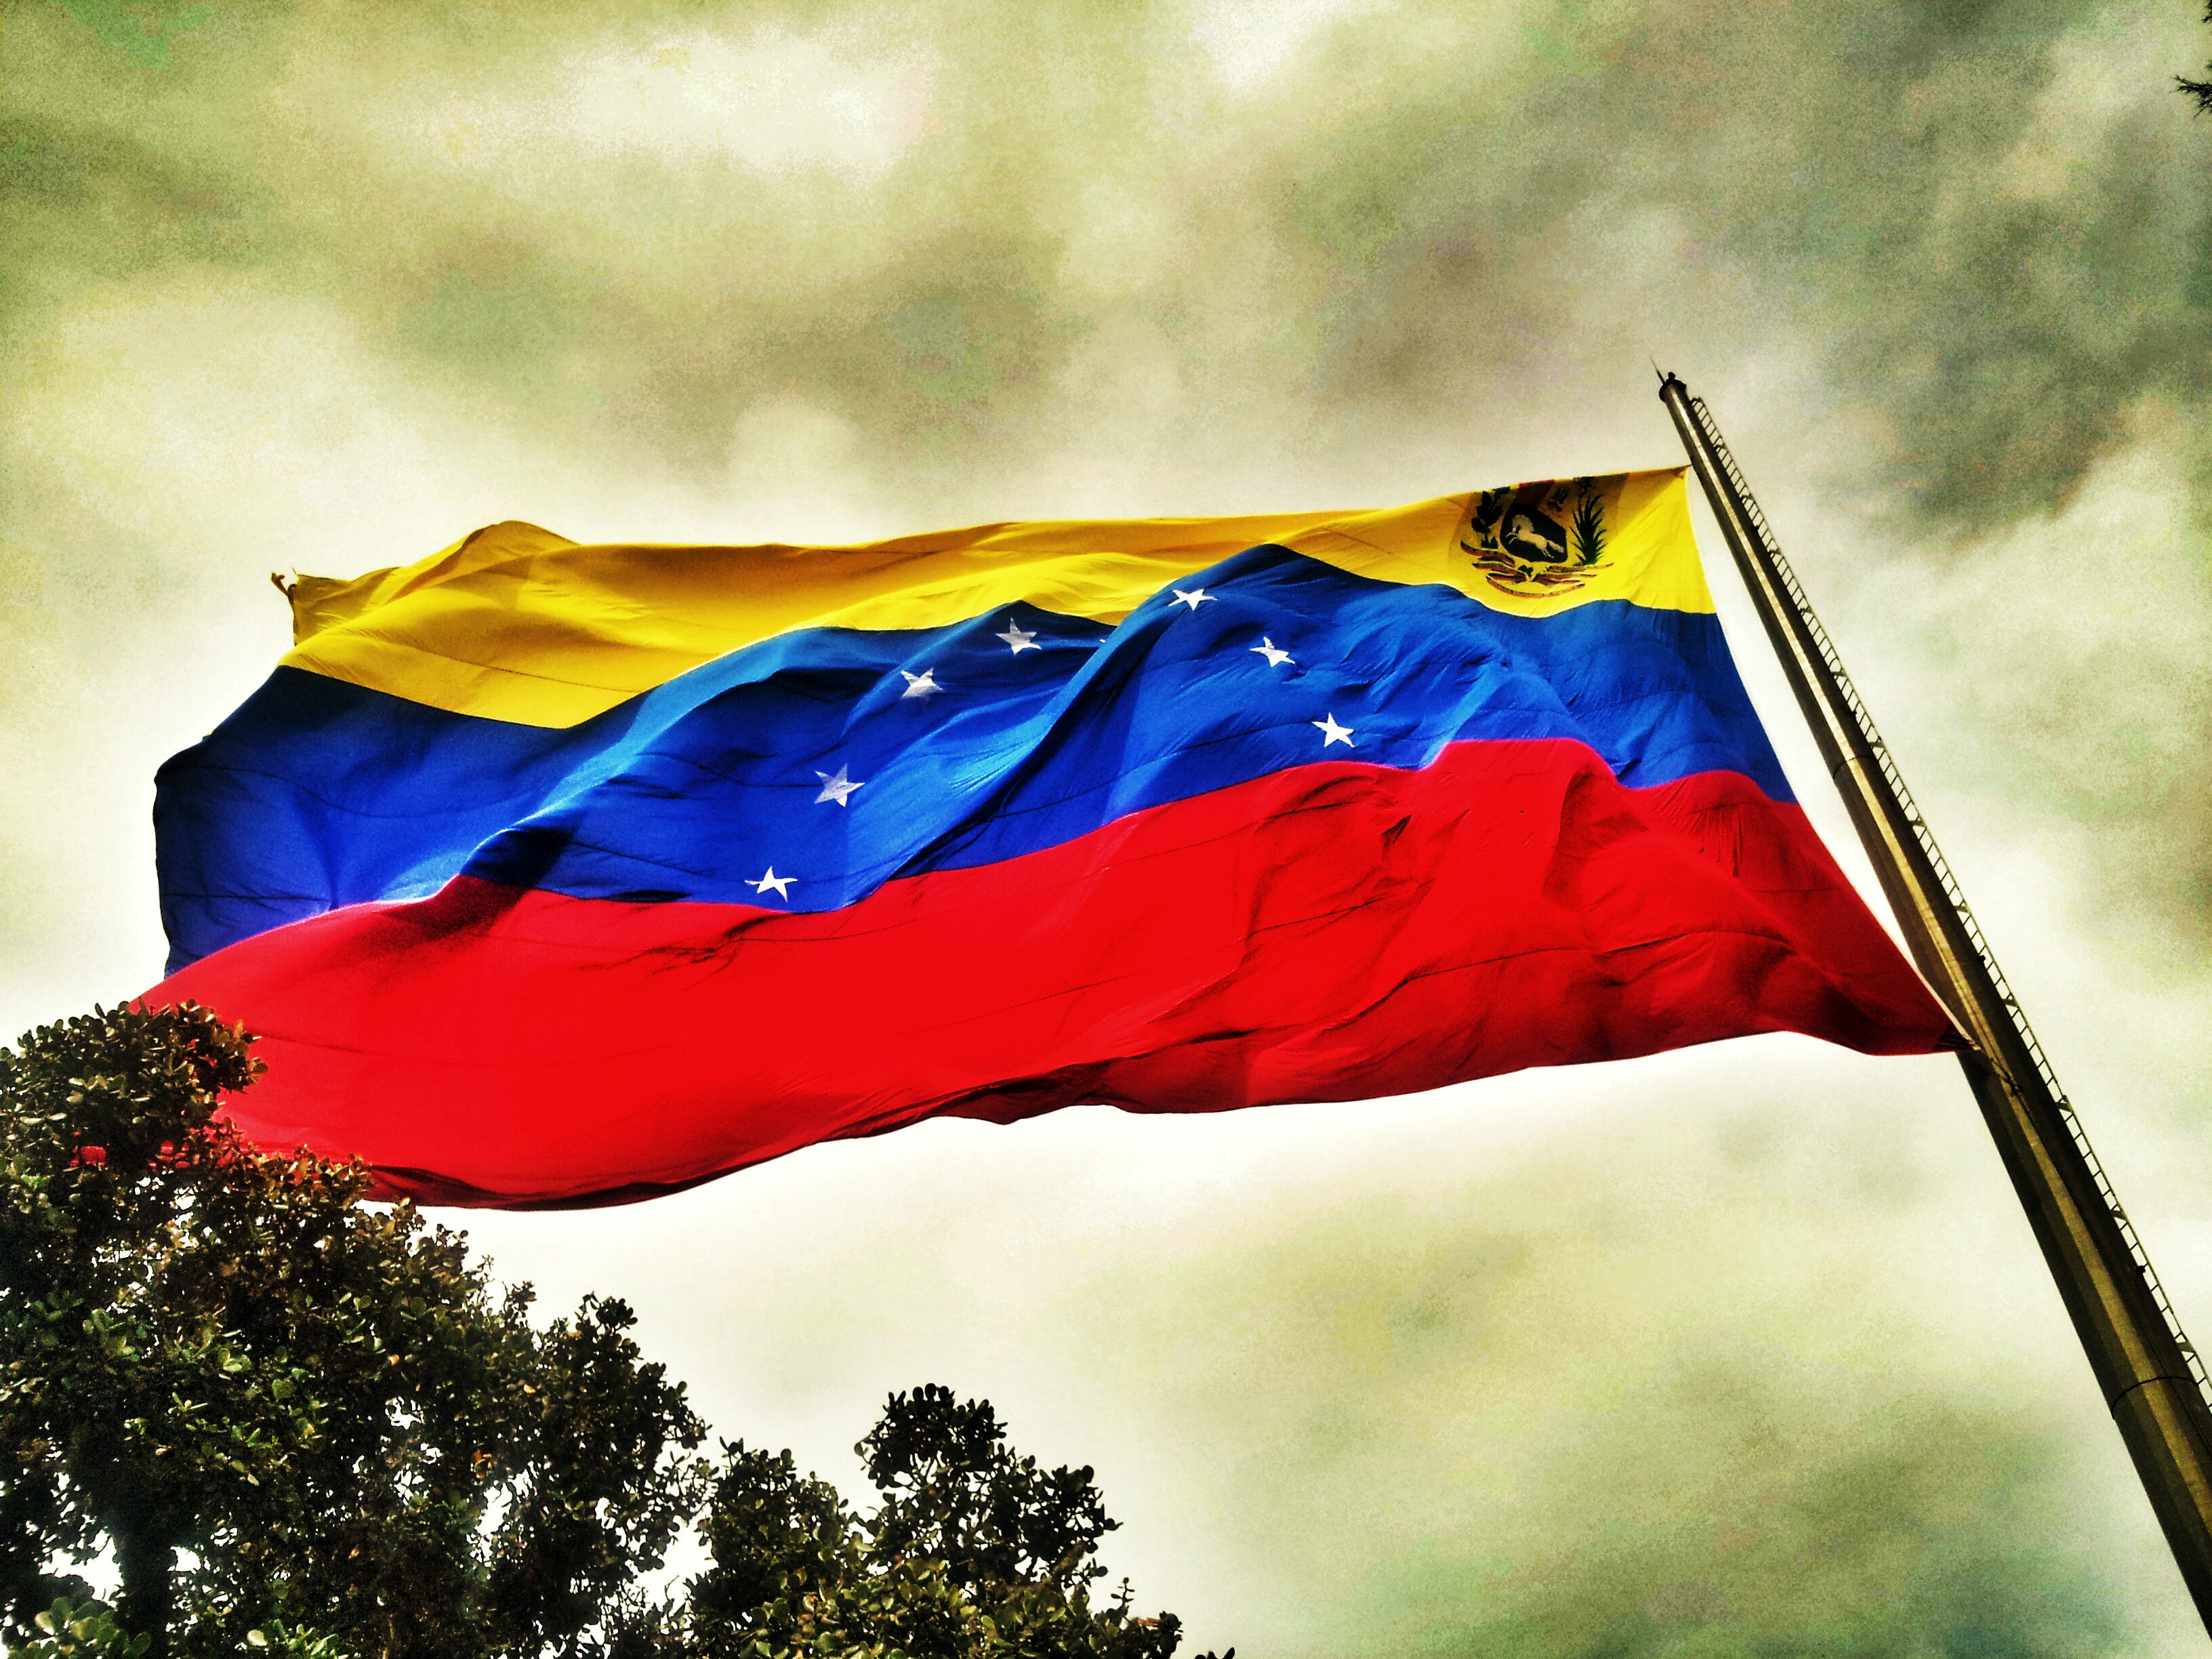 Venezuela Flag, wikipedia commons